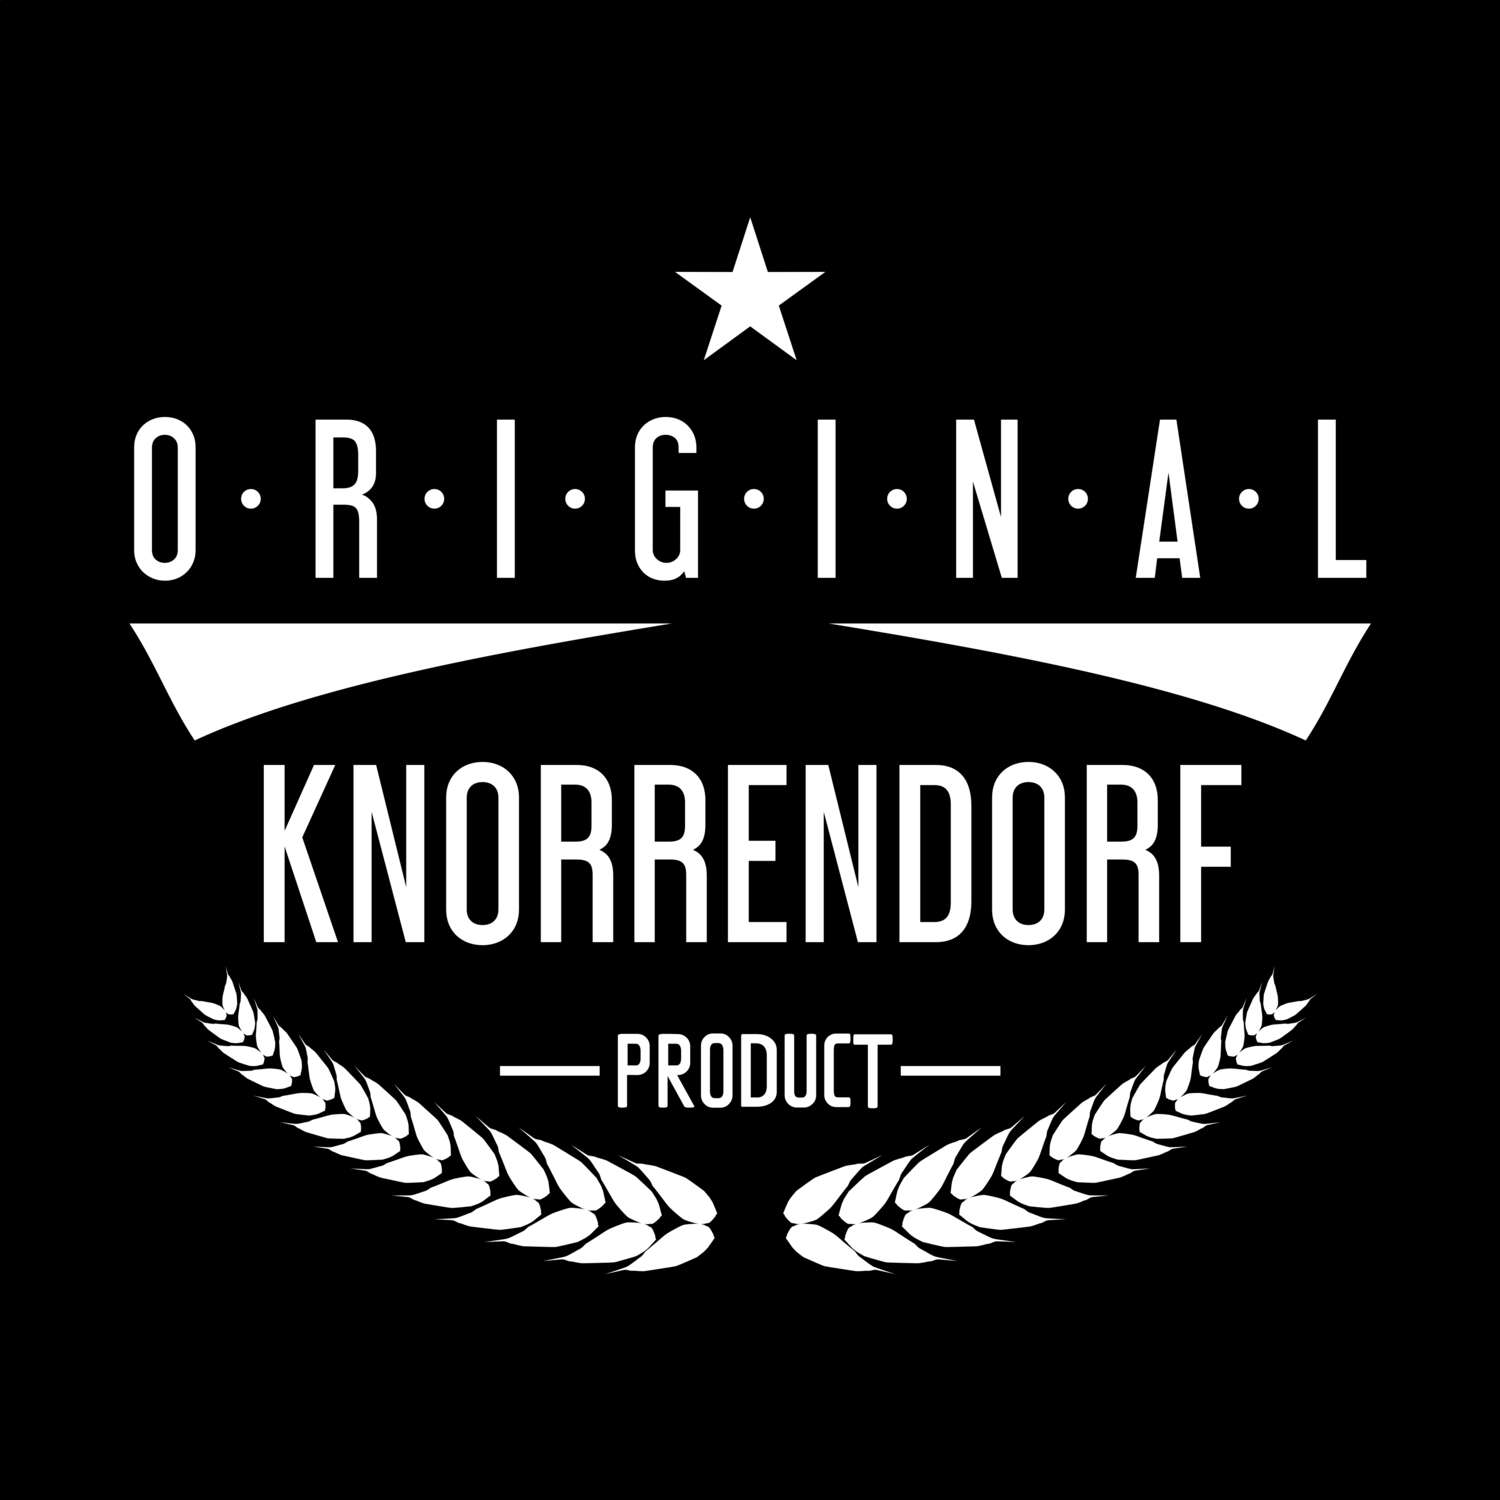 Knorrendorf T-Shirt »Original Product«